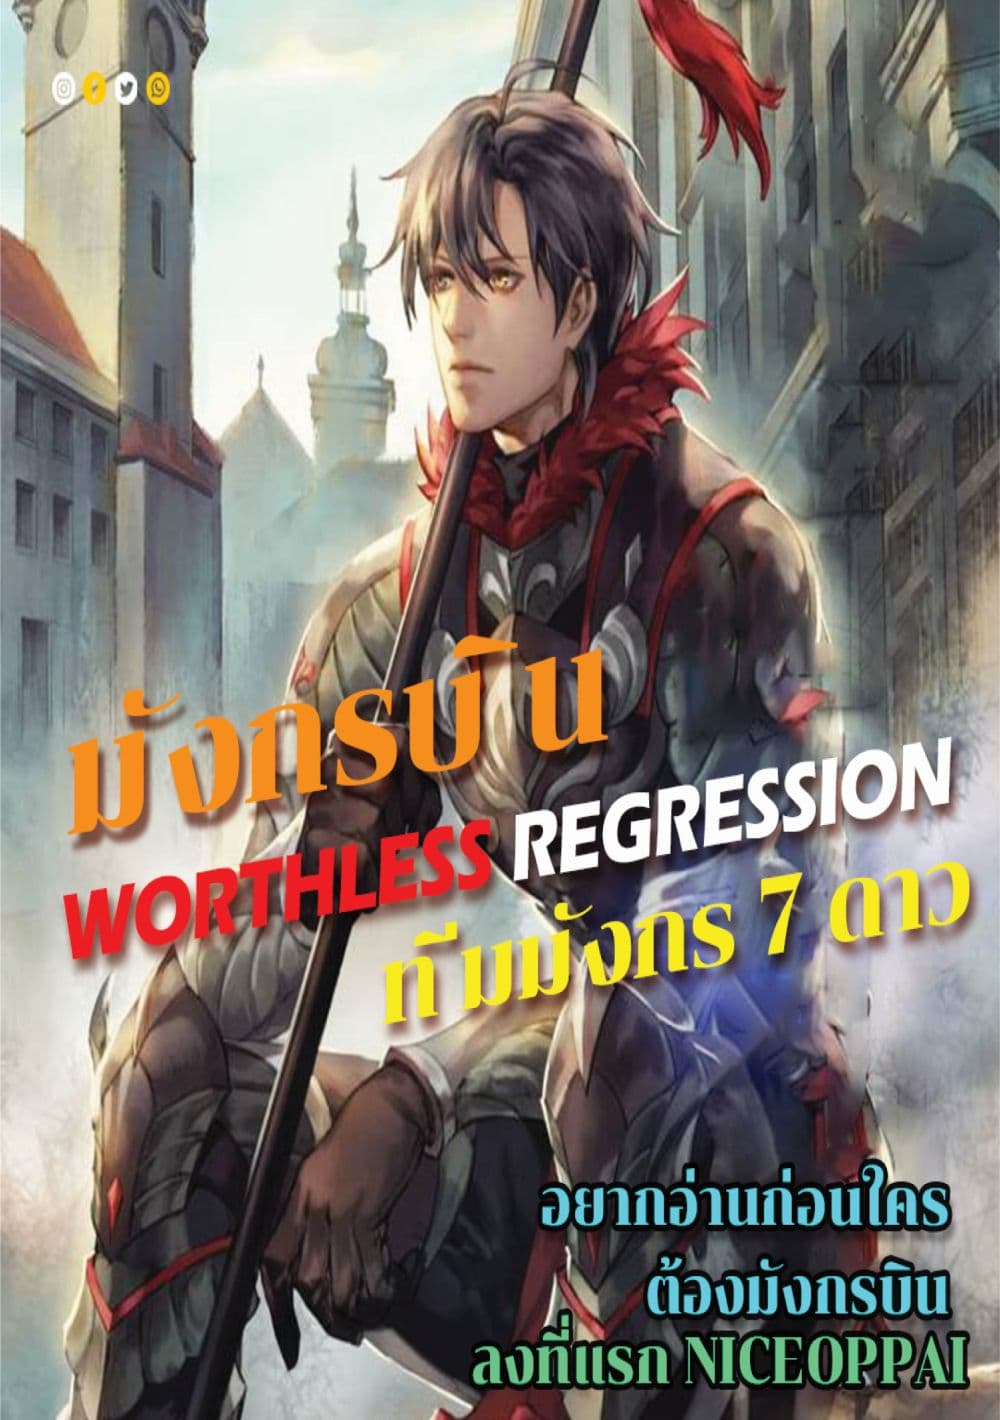 Worthless Regression 13-13